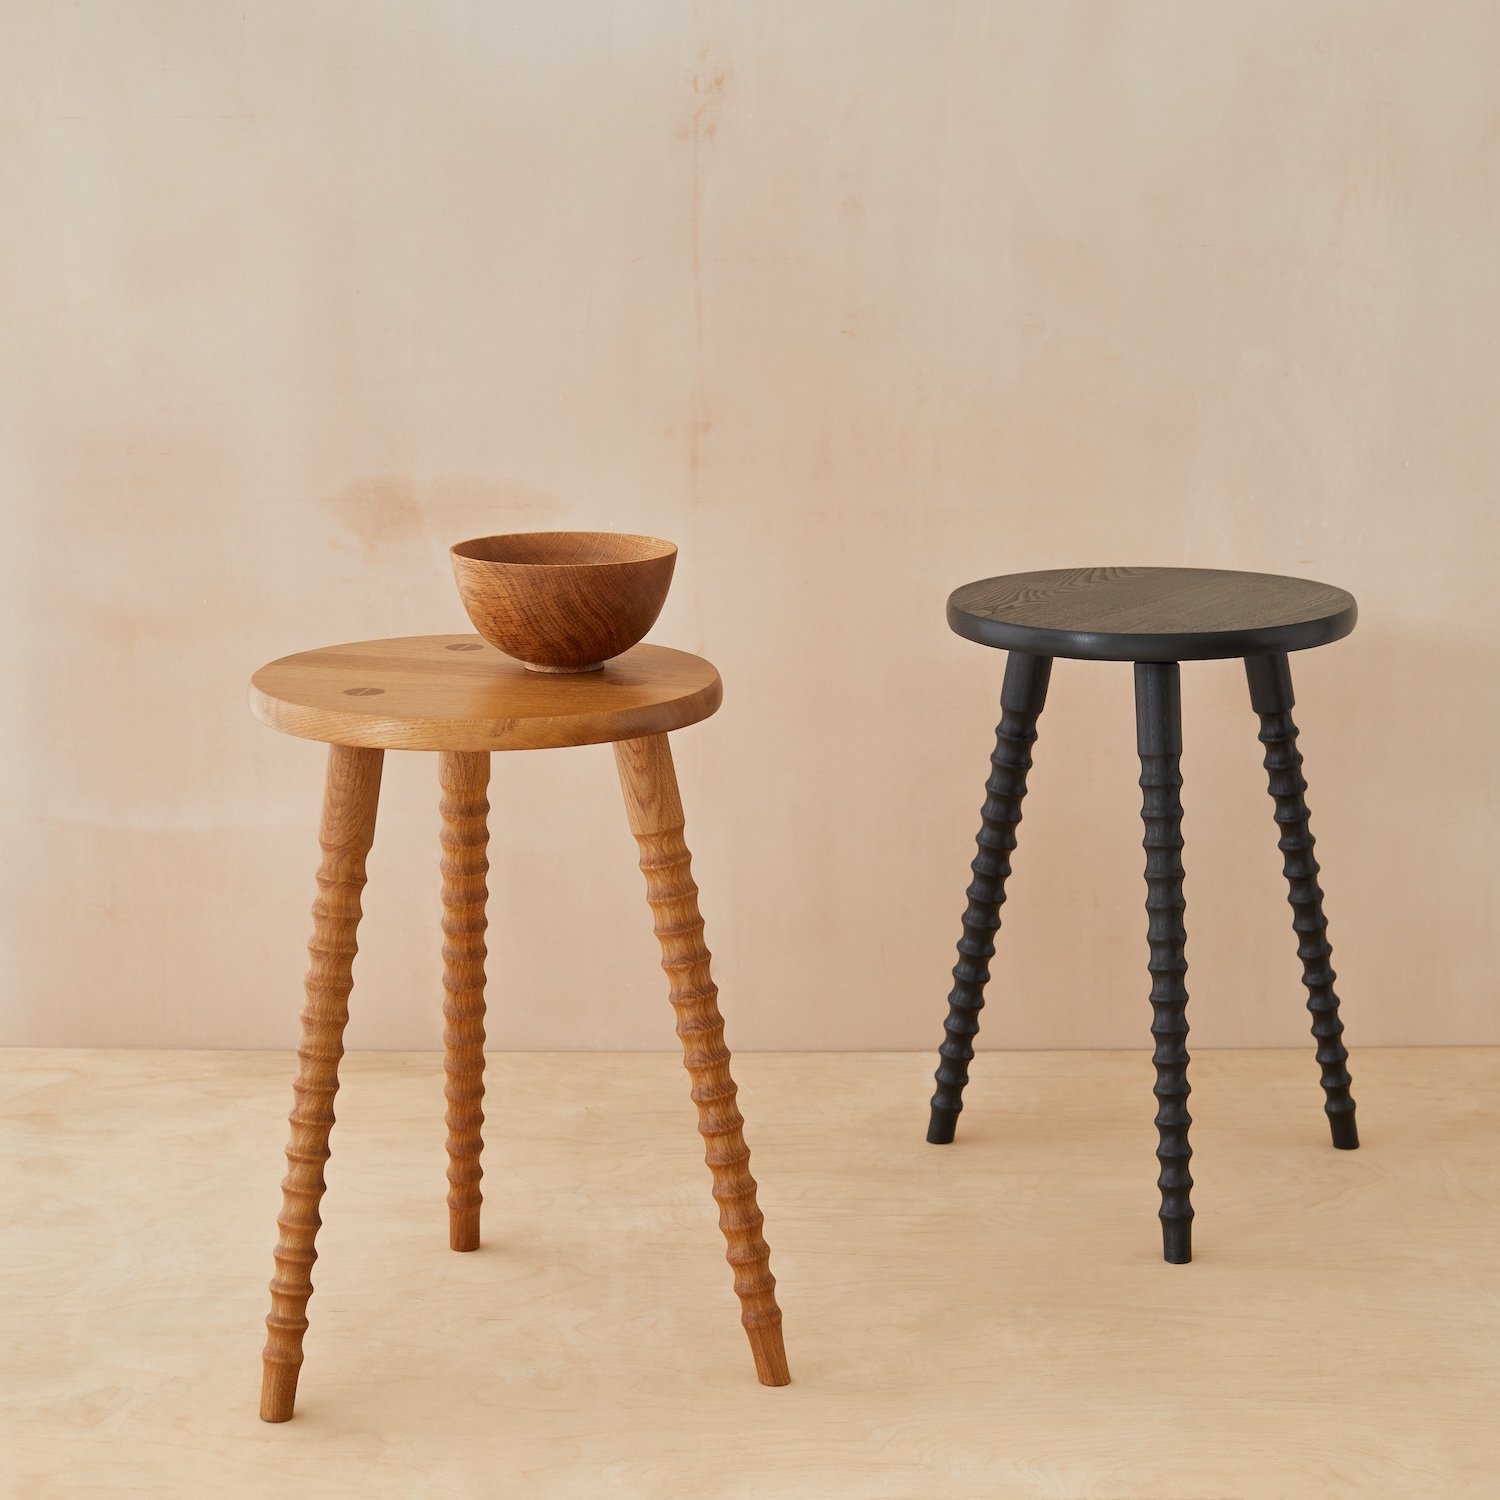 knot-iver-side-table-studio-oak-black-ash.jpg